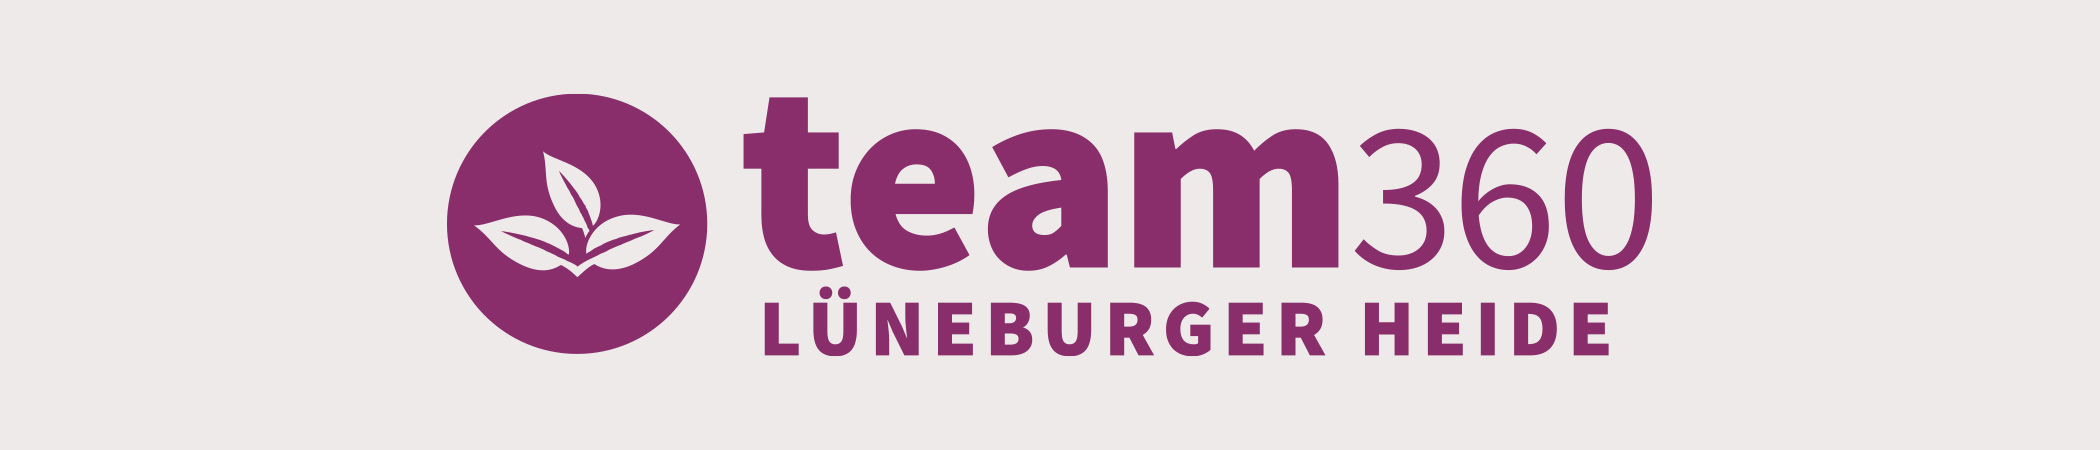 Team Lüneburger Heide | 360 Grad Rundgänge rund um Lüneburg